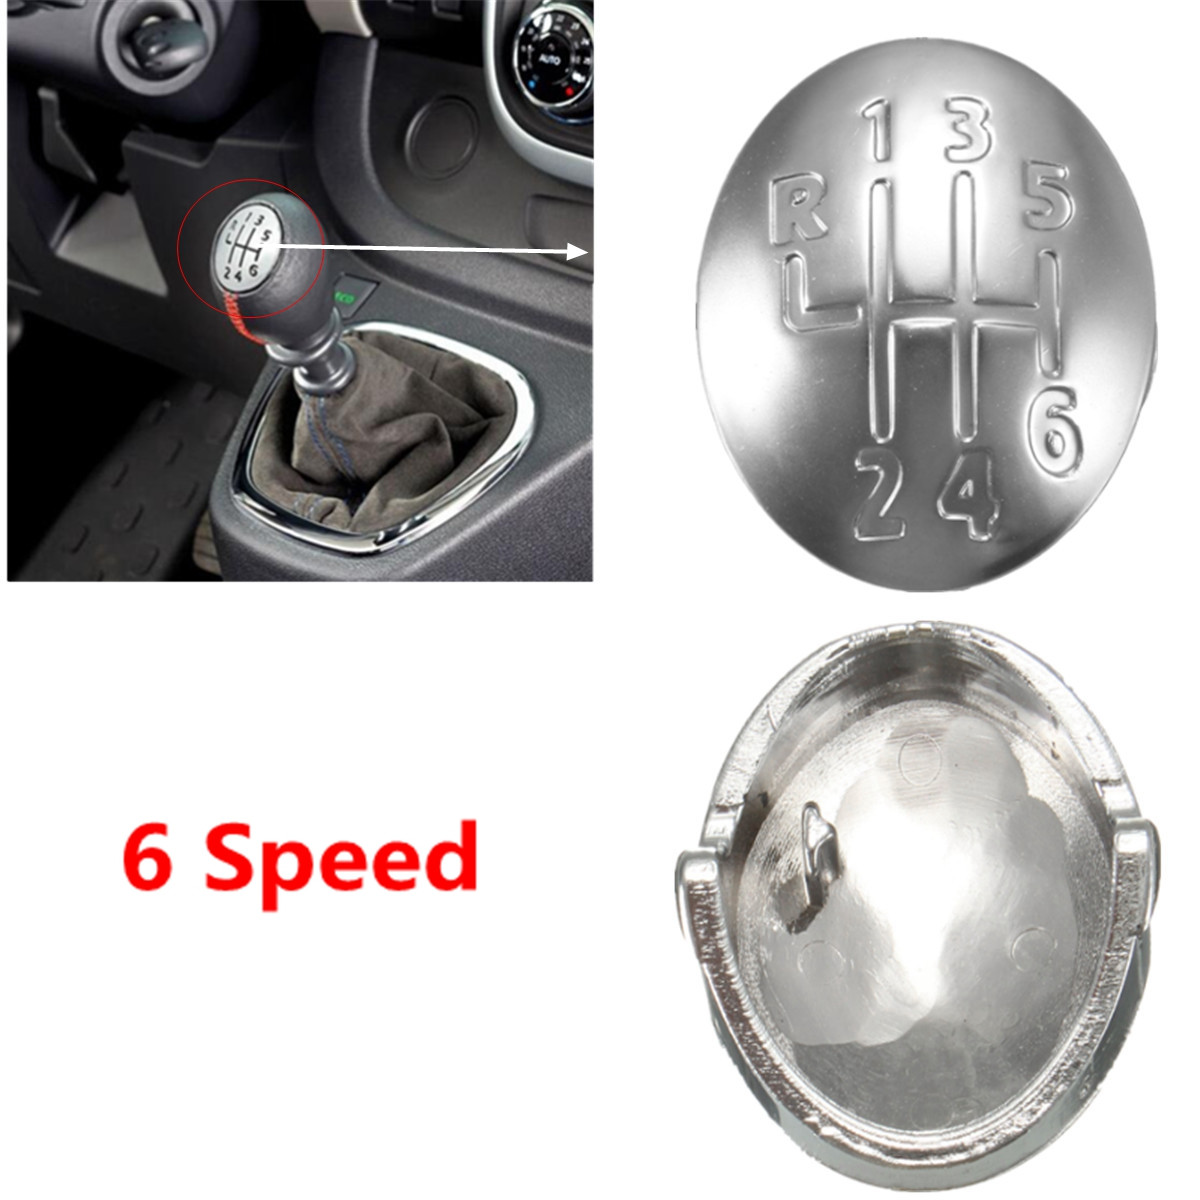 6 Speed Gear Shift Knob Cap Cover For Renault Clio Megane Scenic Twingo Chrome